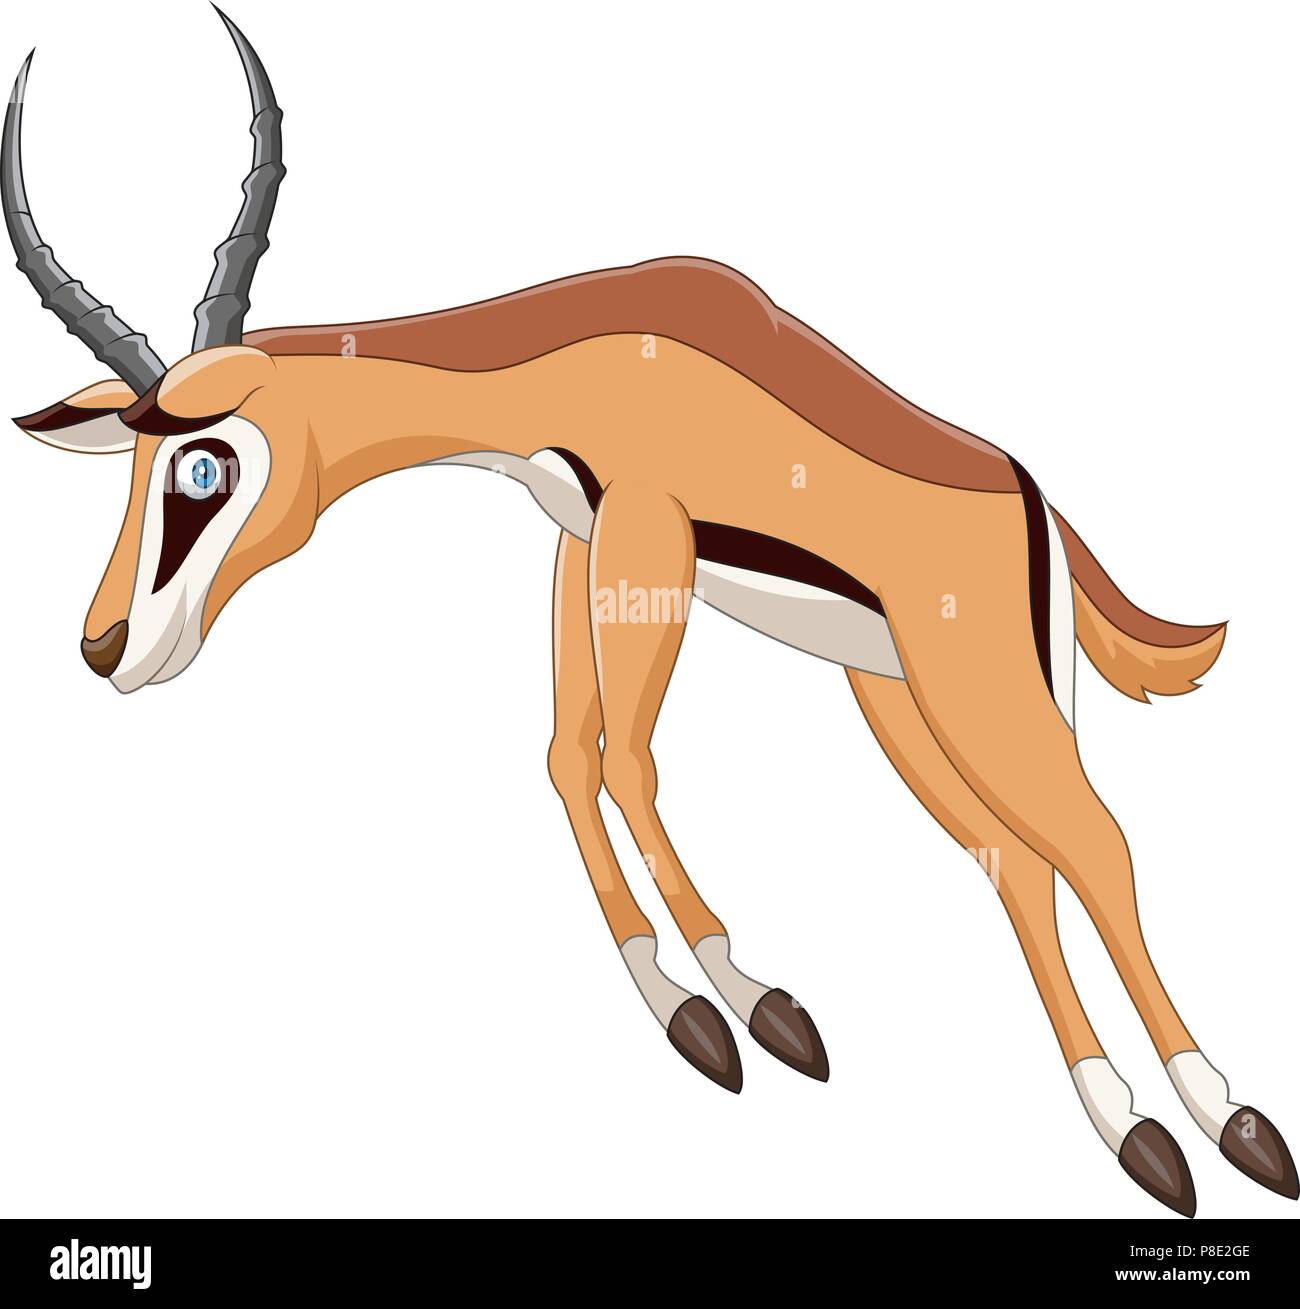 Cartoon antelope jumping Stock Vector